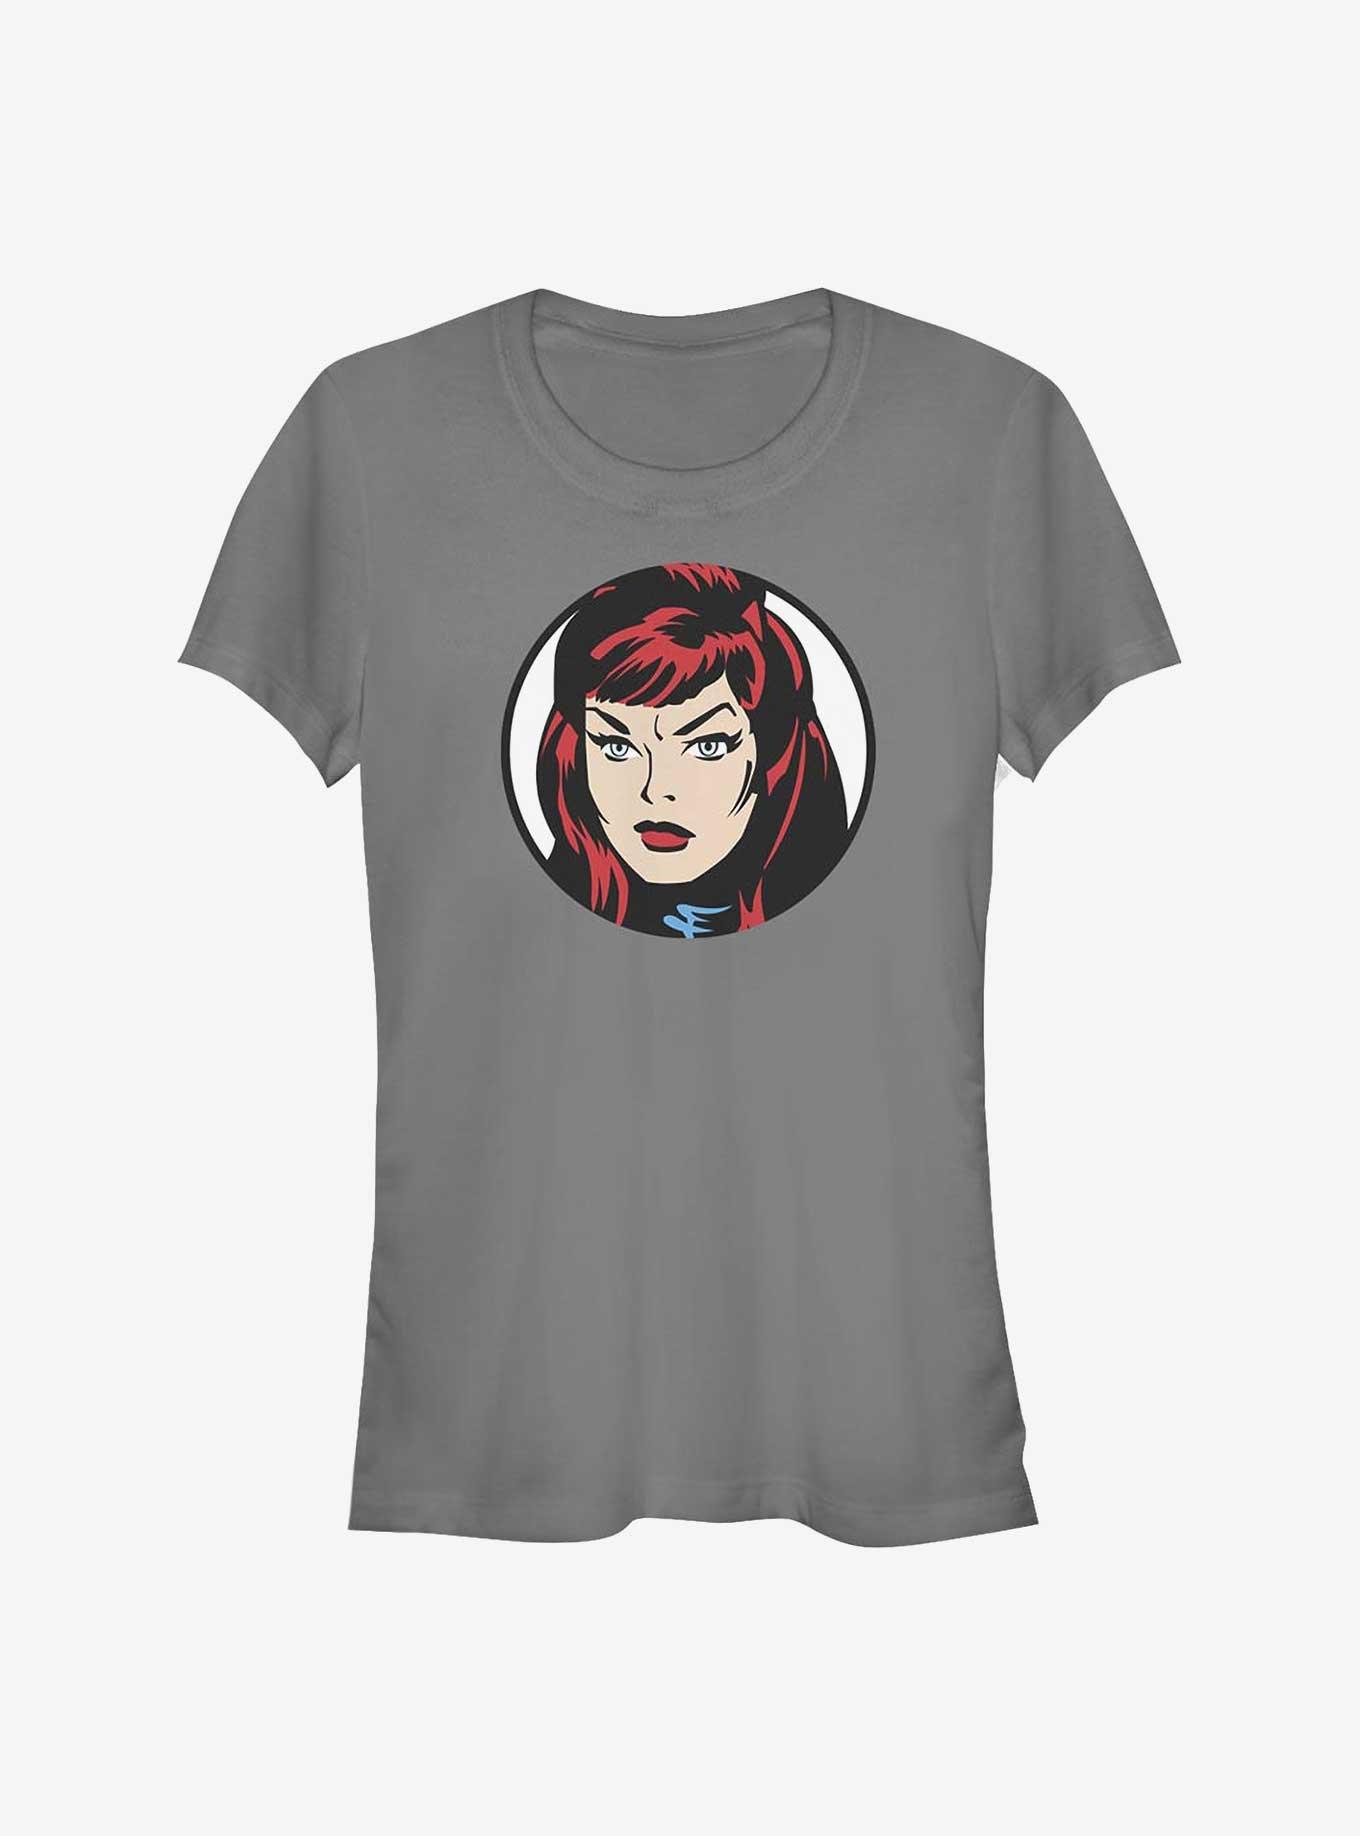 Marvel Black Widow Vintage Face Girls T-Shirt, CHARCOAL, hi-res